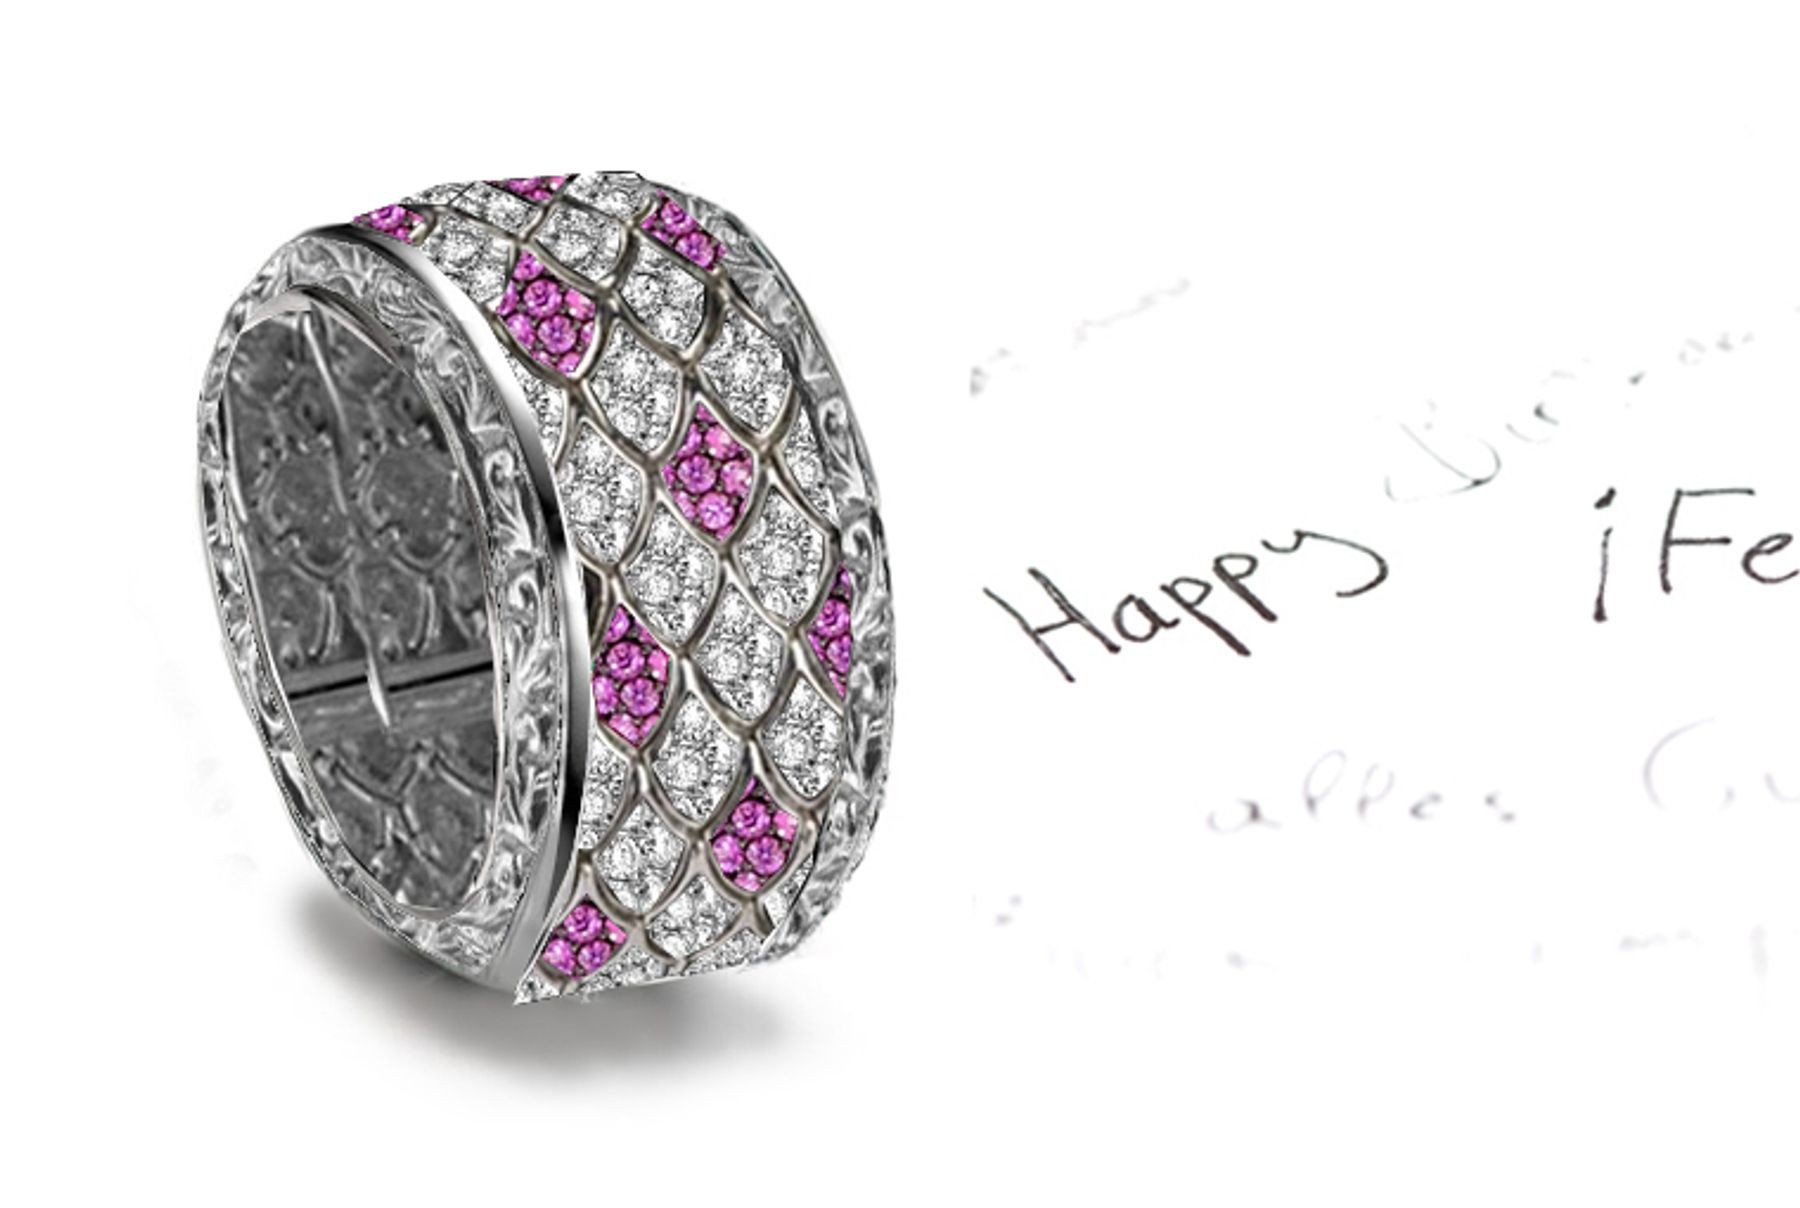 Impeccable: Women's Pink Rich Color Sapphires and Diamonds